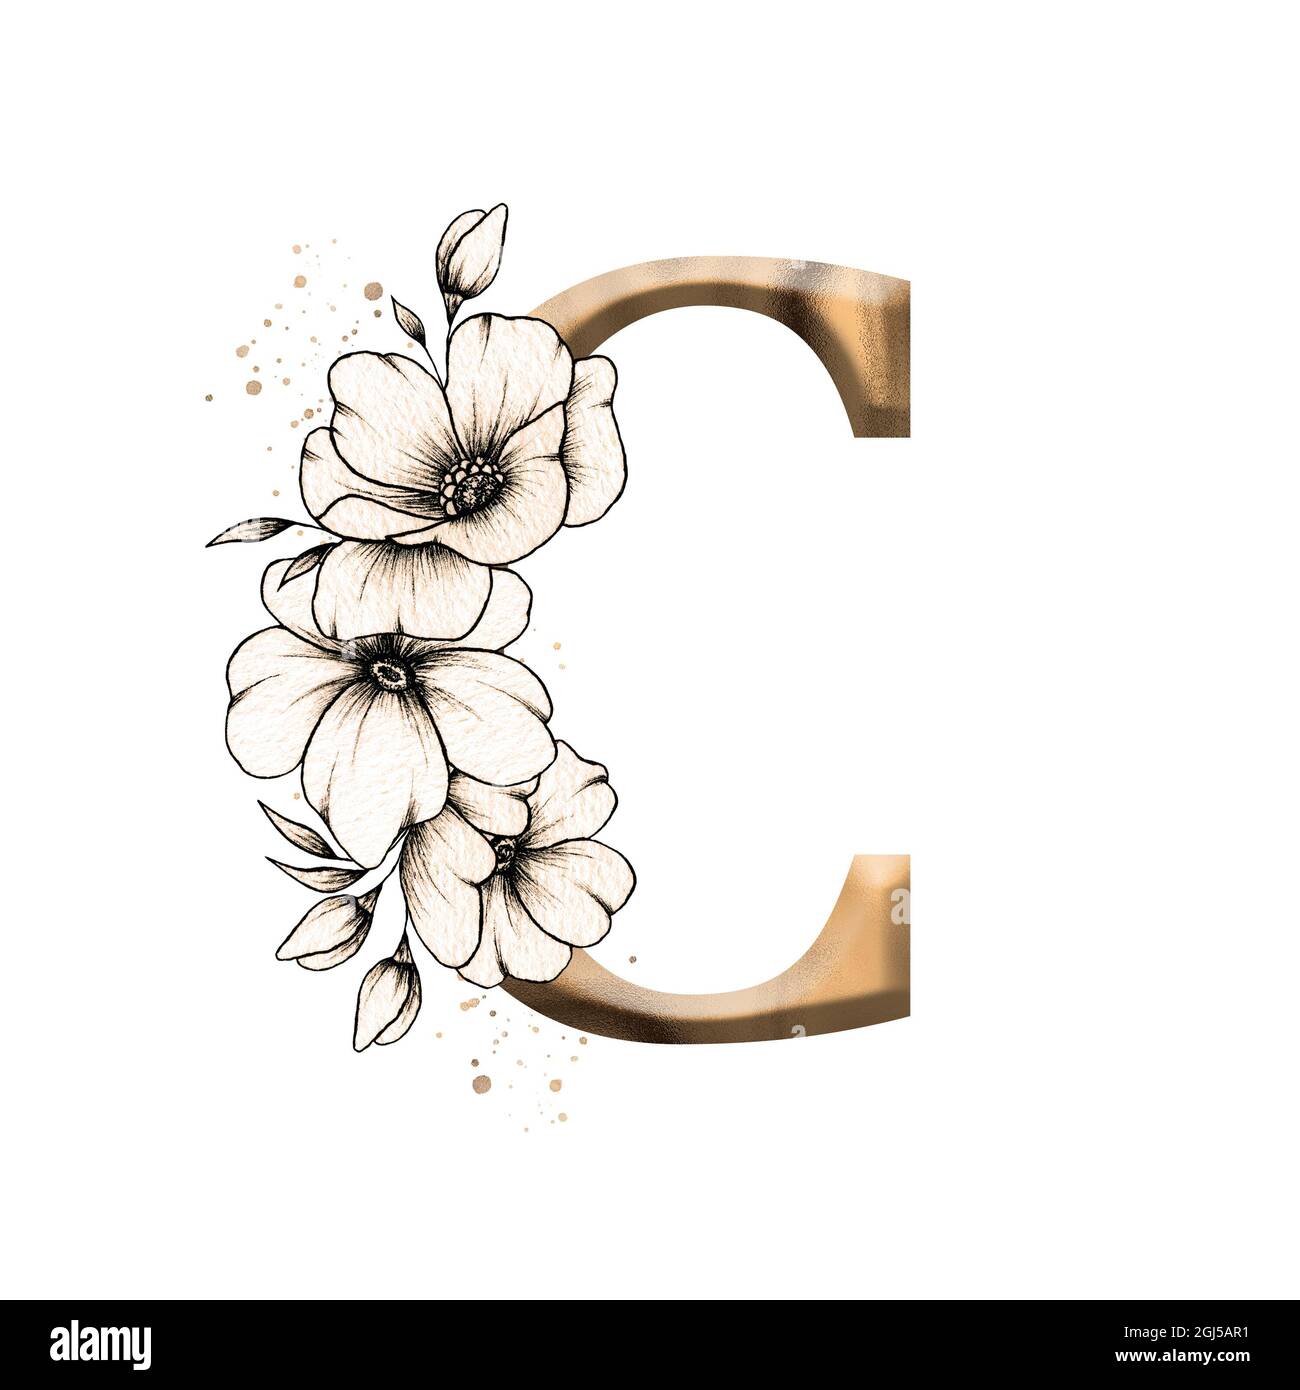 Flowered Monograms & Floral Design Elements - Design Cuts